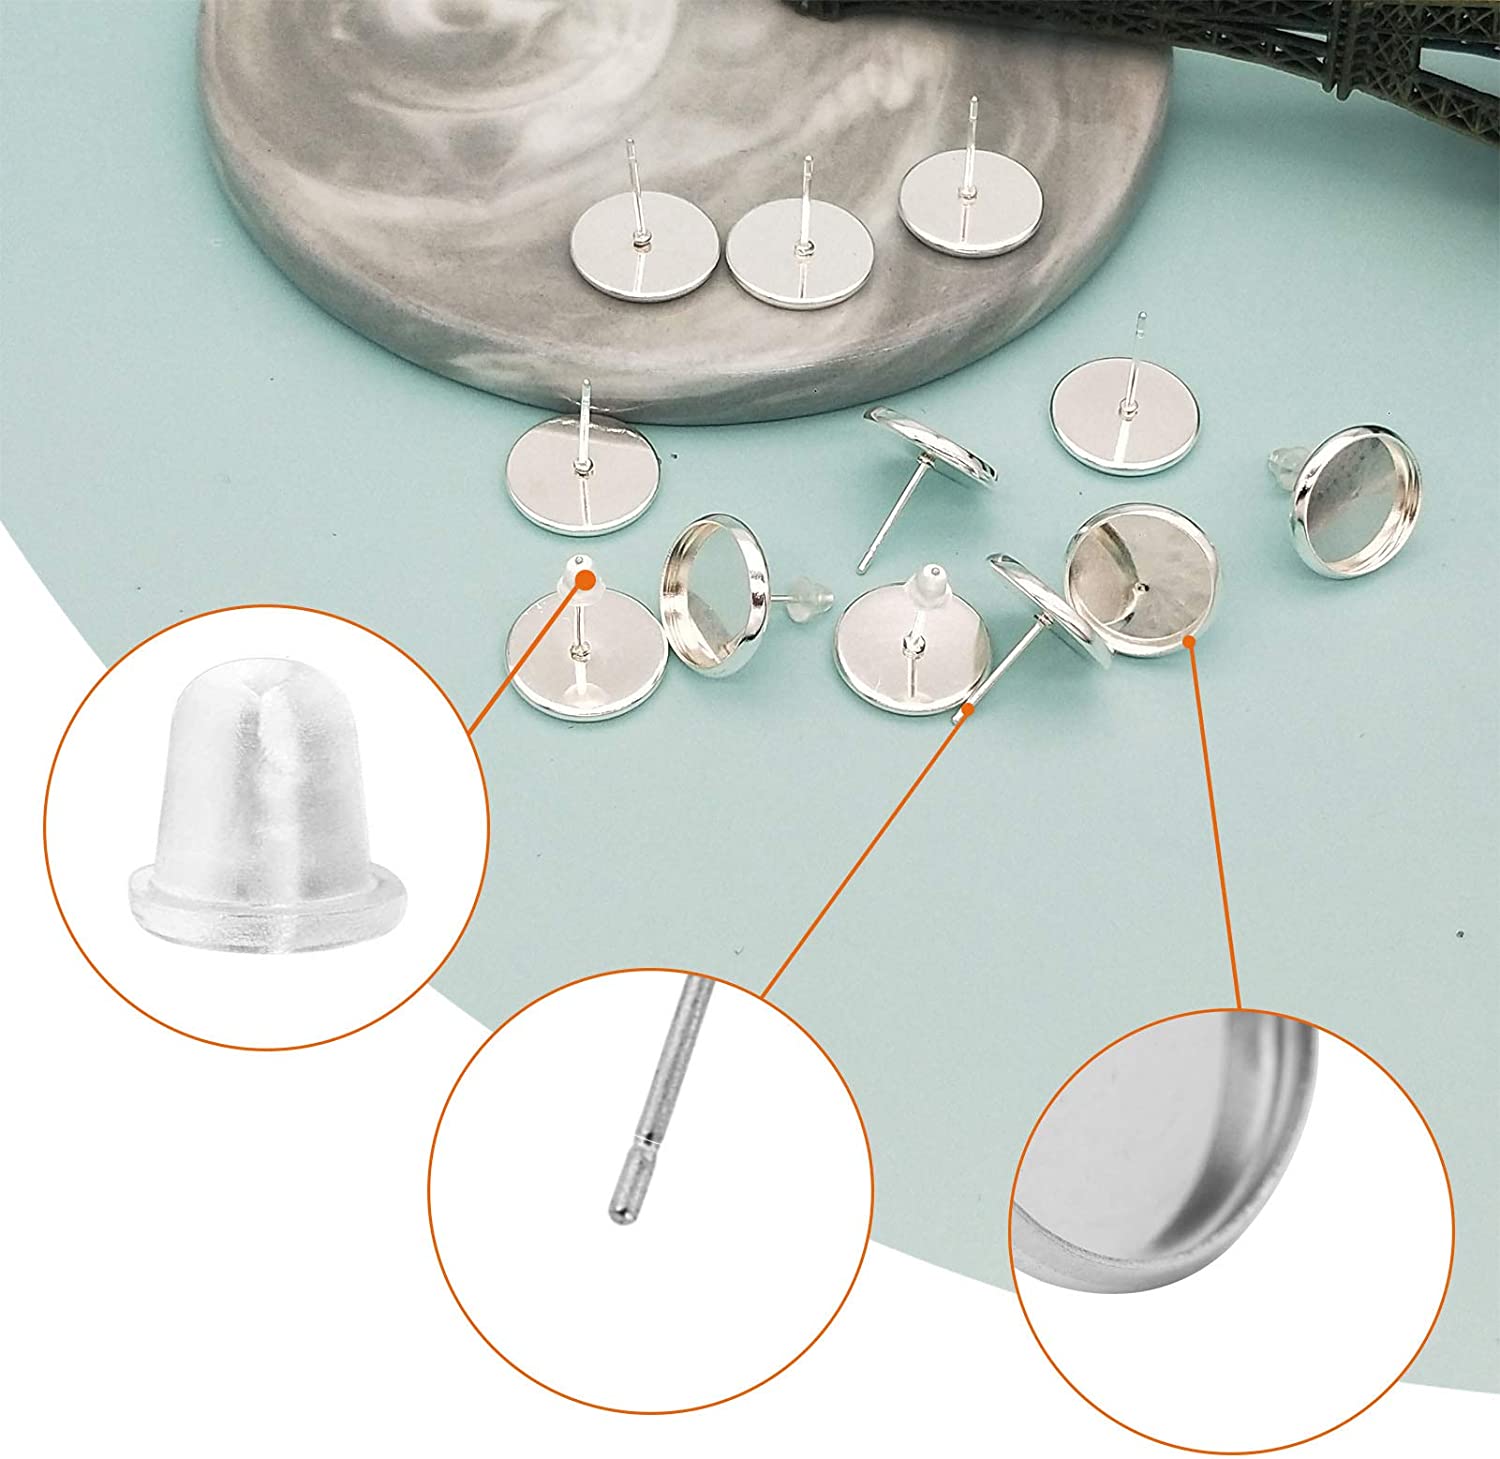 Blank Stud Earring Bezel Silver,200Pcs Stud Earring Kit Includes 100Pcs Cup Post Earrings and 100Pcs Rubber Earring Backs for DIY Jewelry Findings,Earring Making Supplies - image 4 of 5